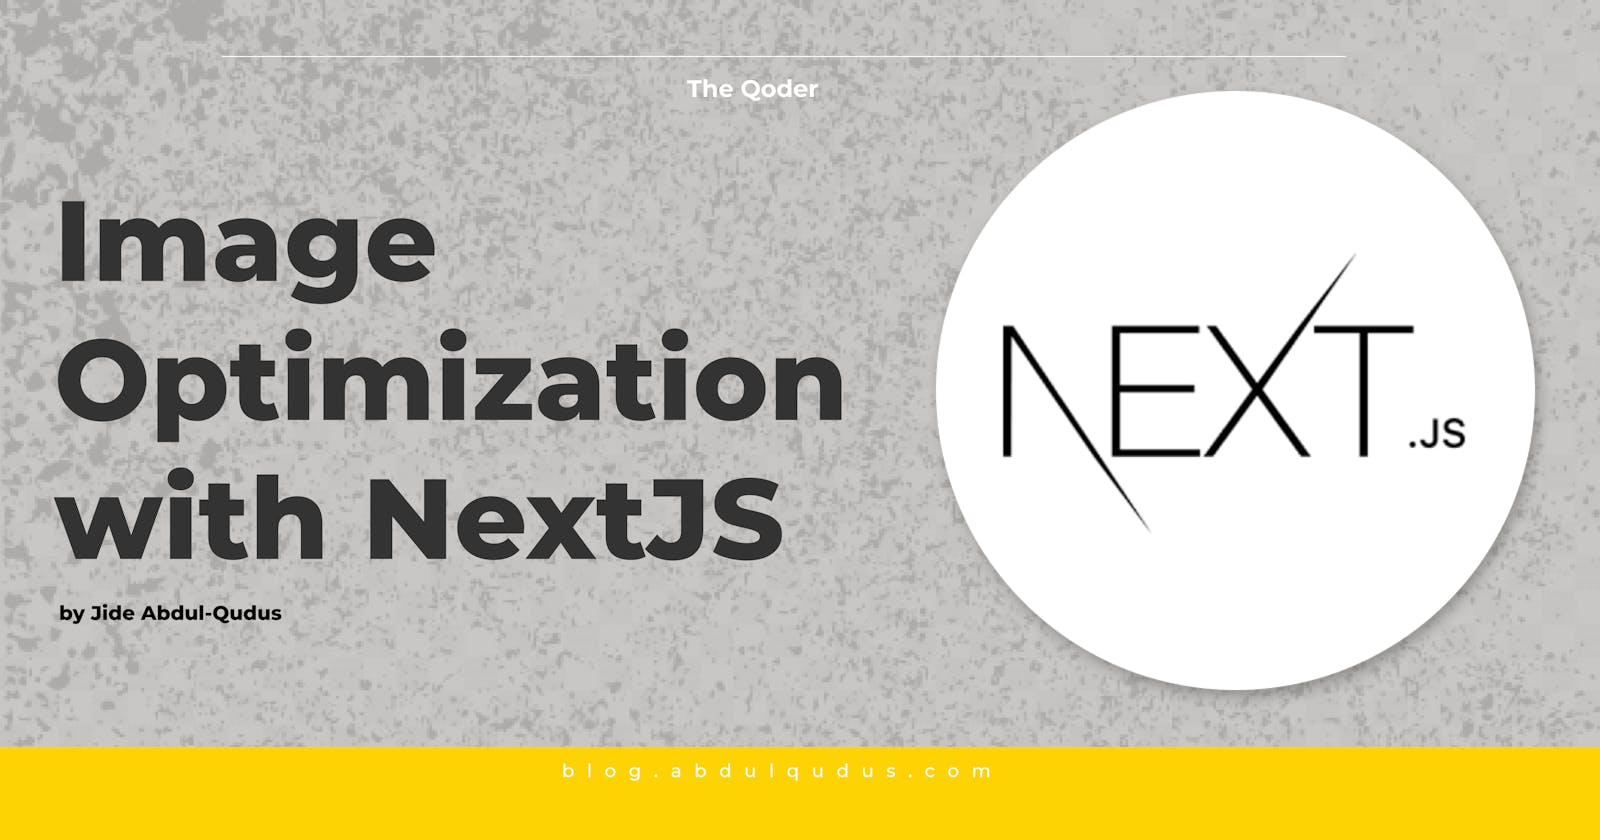 Image Optimization with NextJS